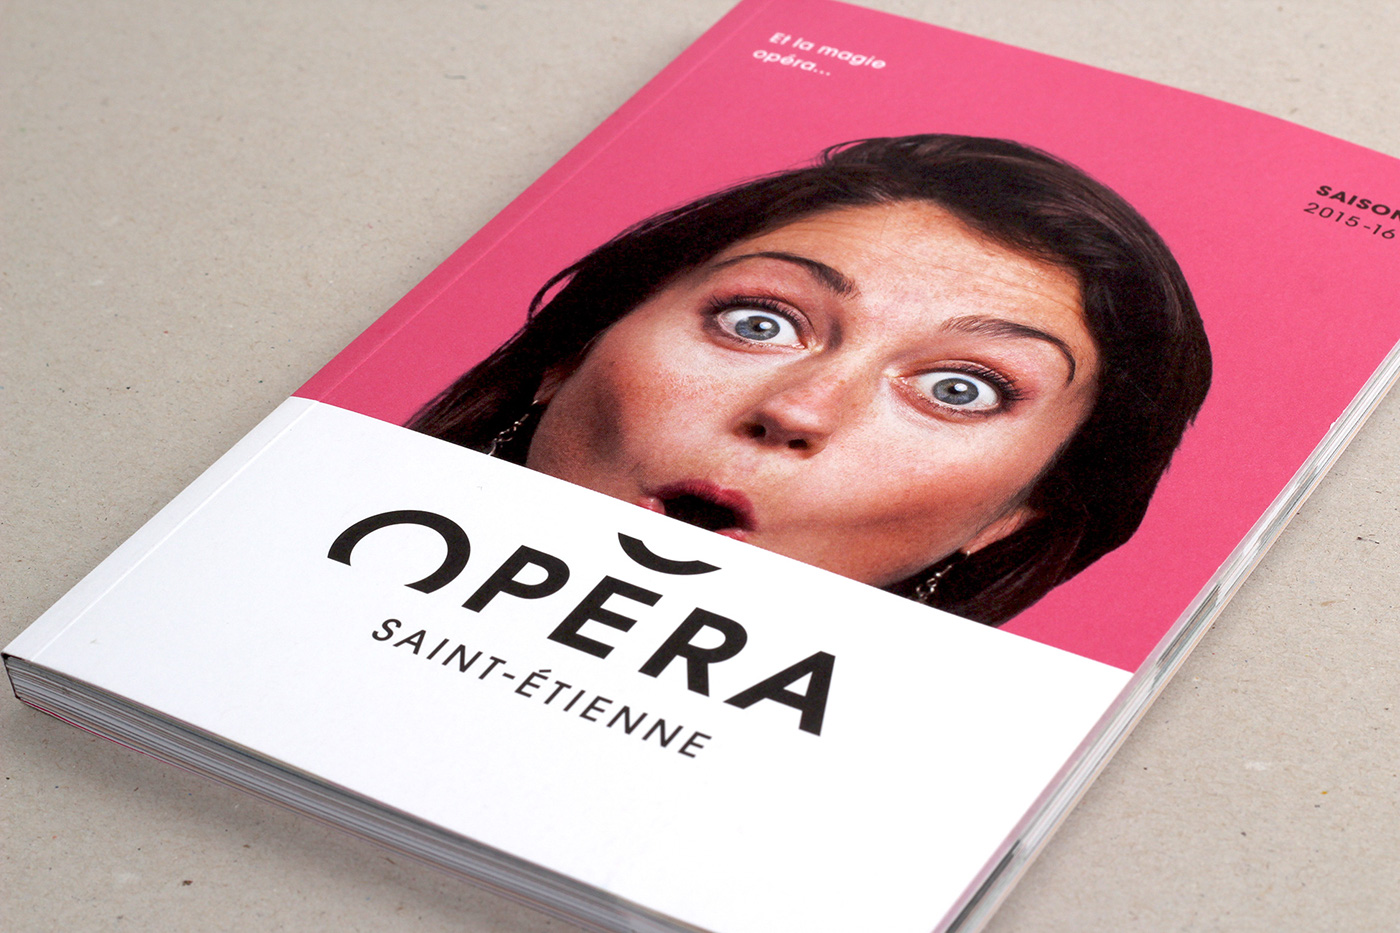 opera house logo minimal colorfull portraits season Musical agca